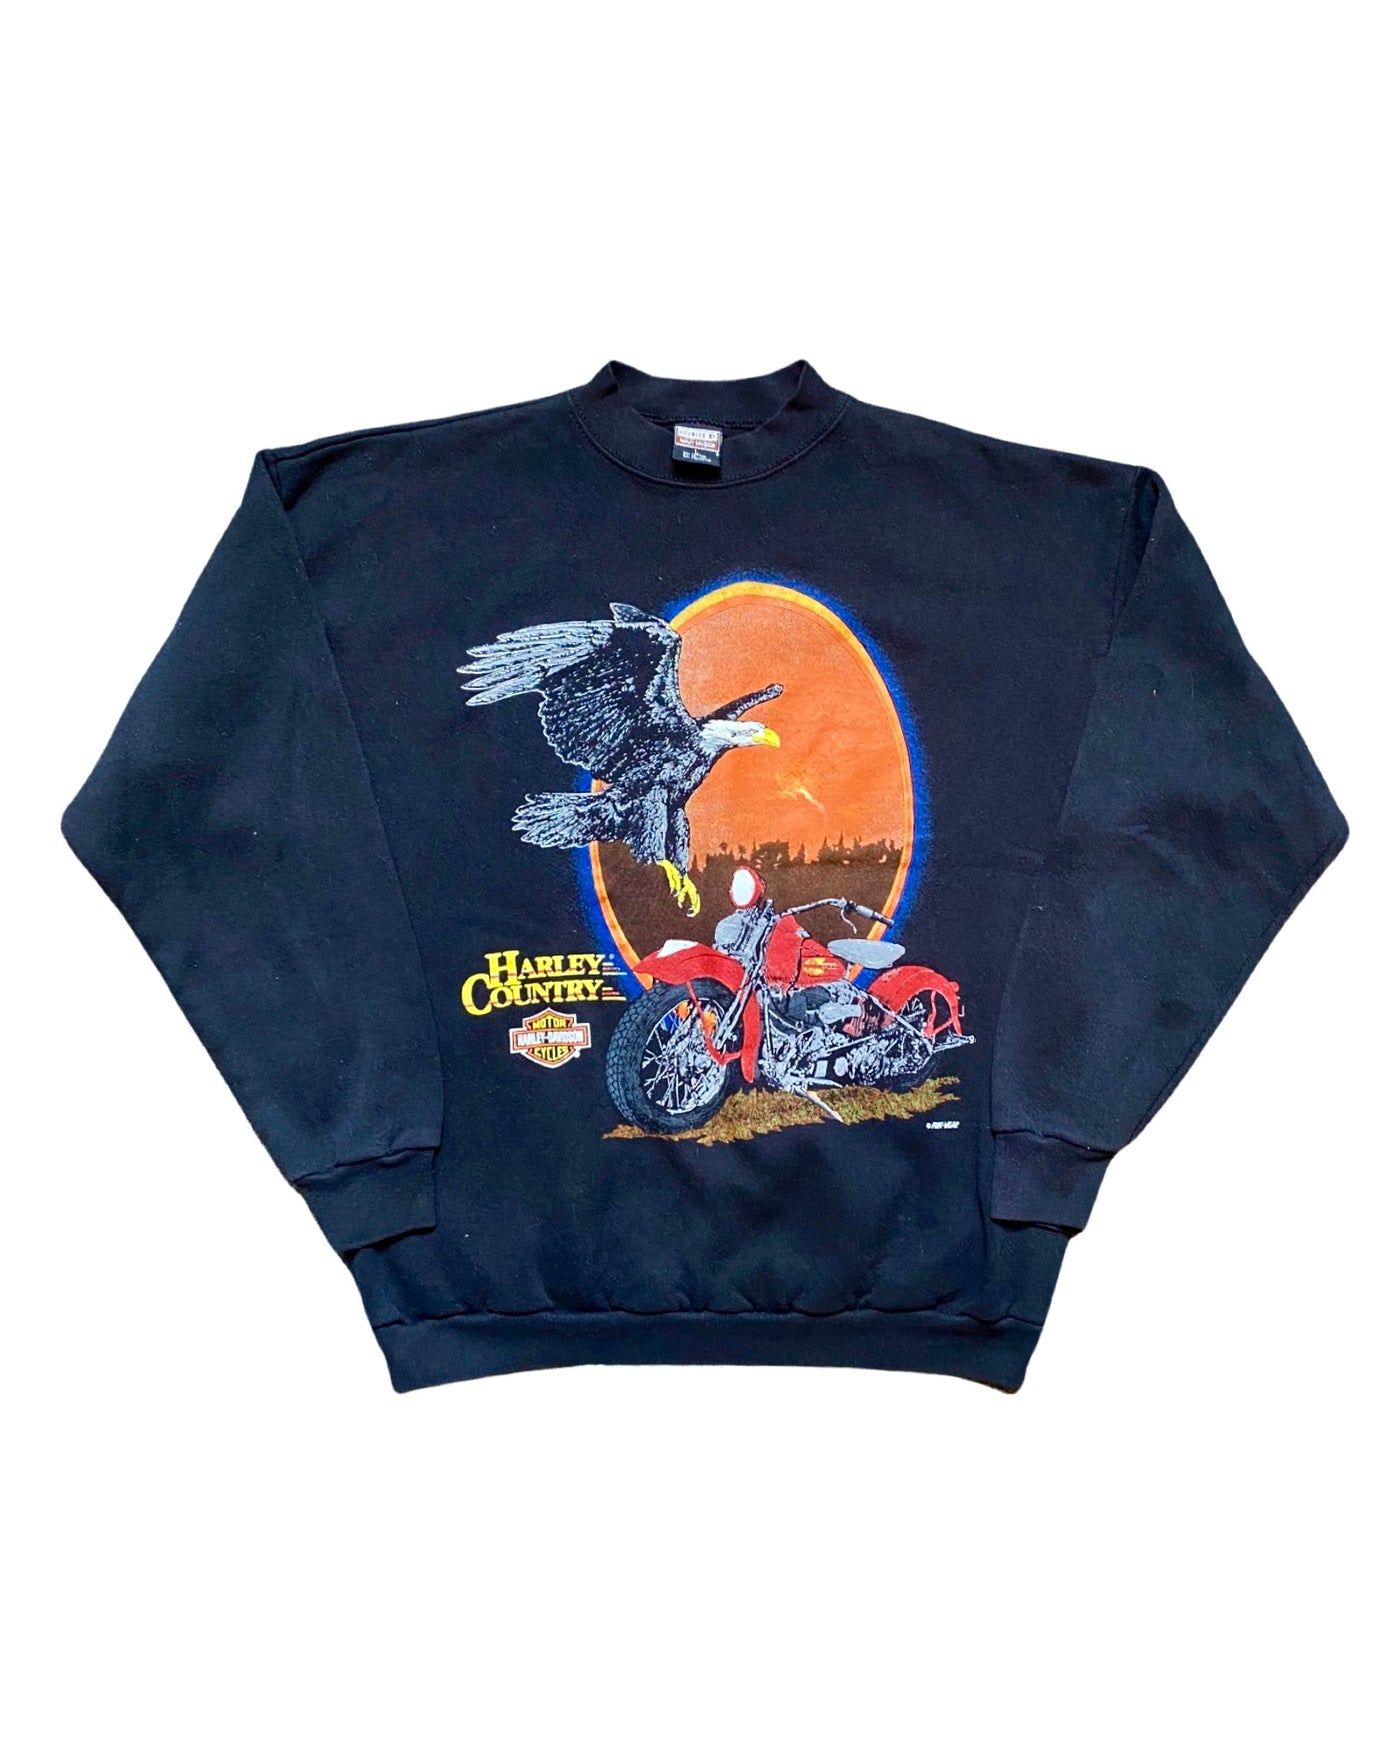 Vintage 90s ‘Harley Country’ Crewneck